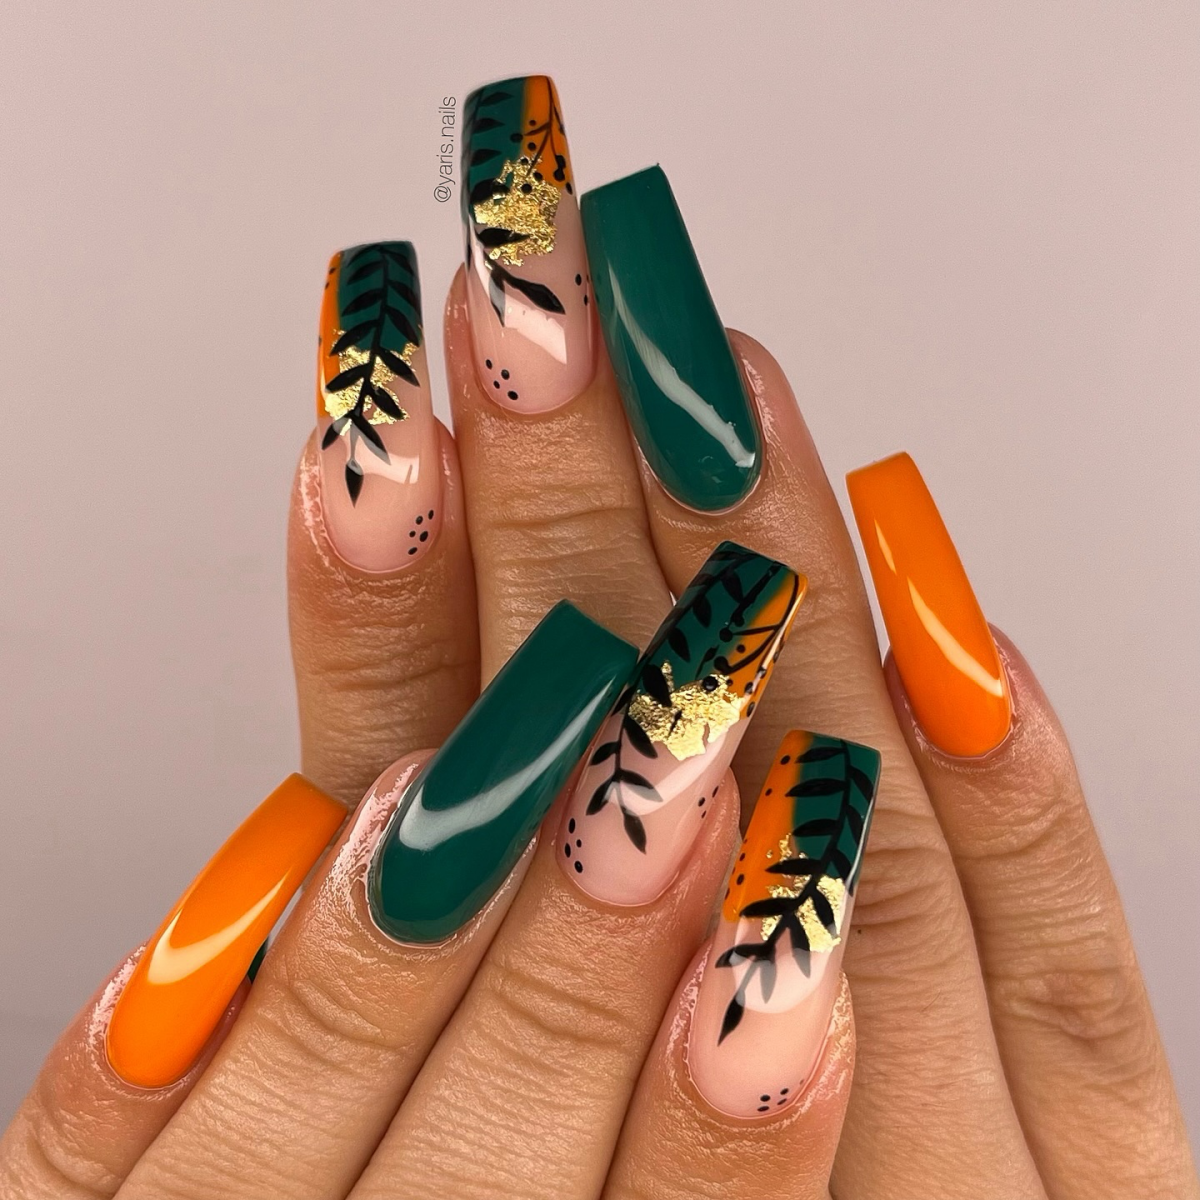 orange nail design